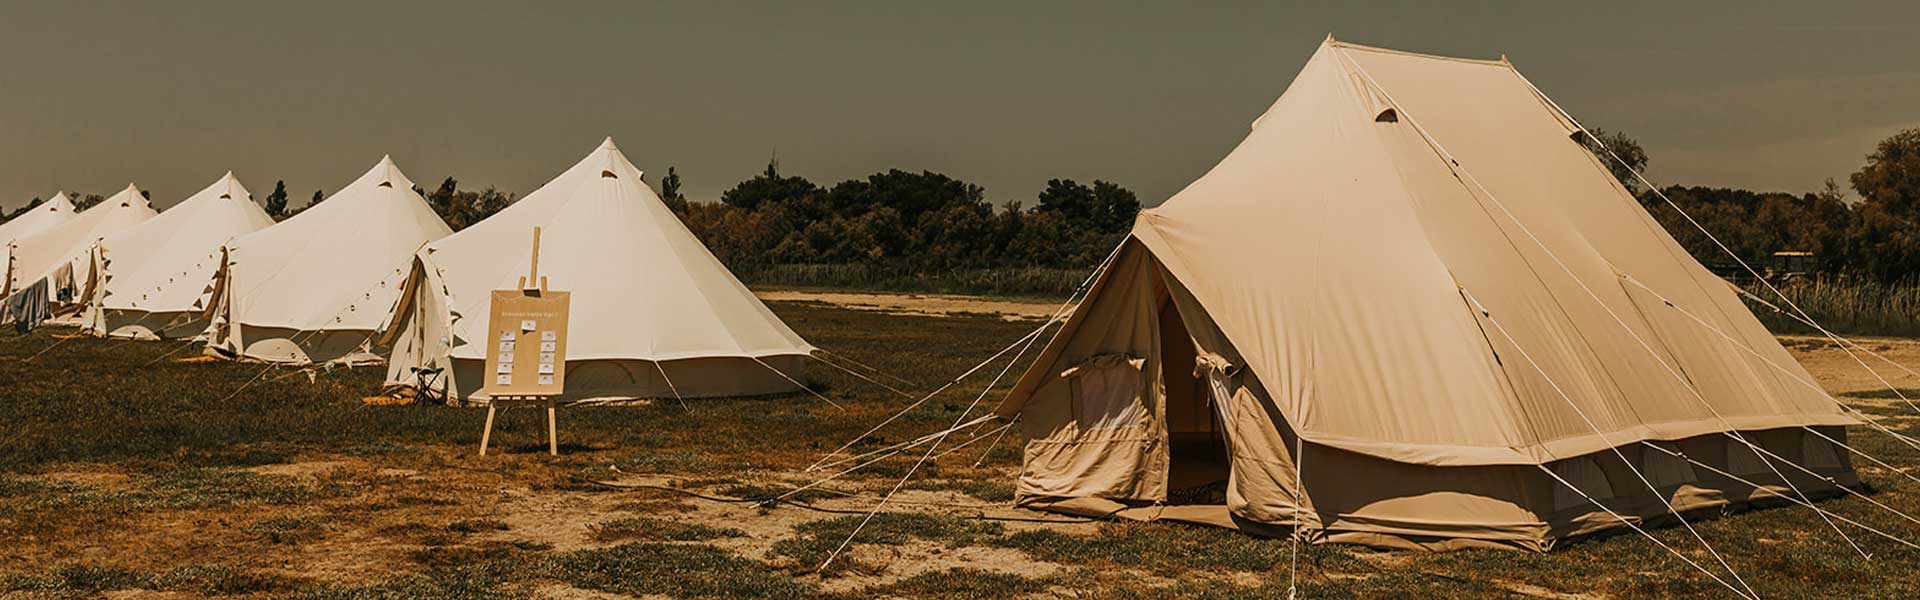 tentes nomades